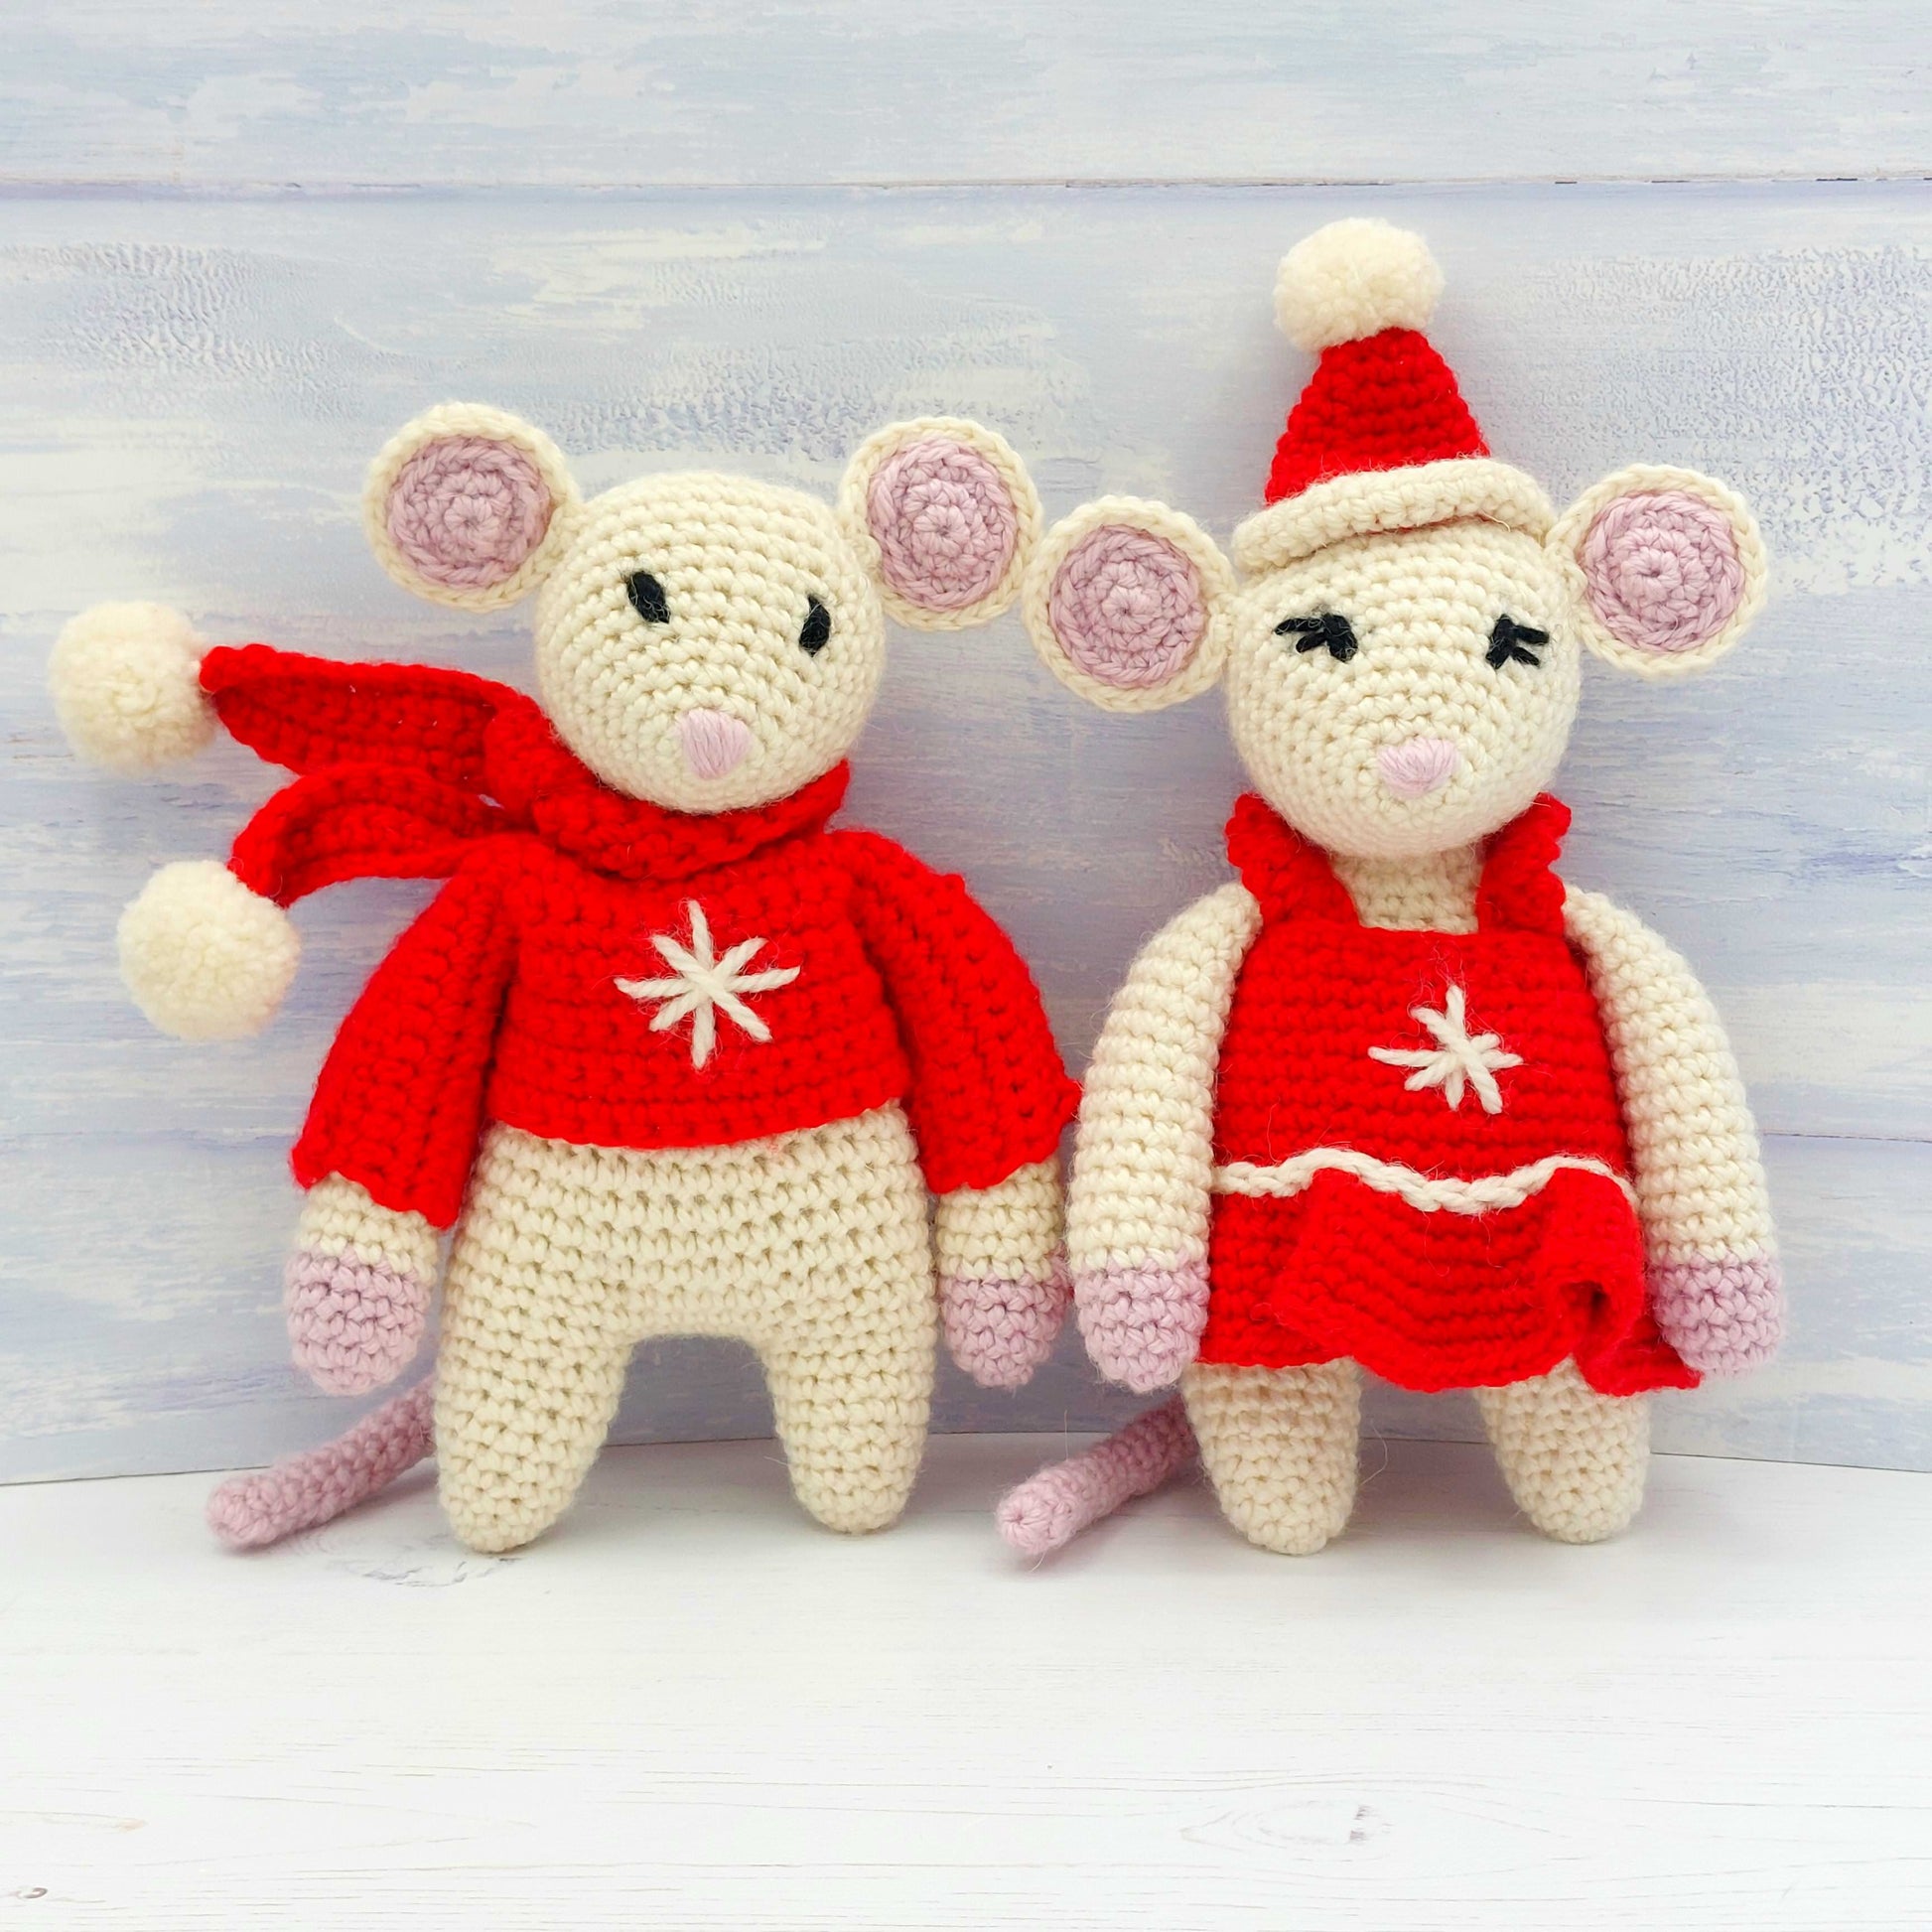 Crochet Mice in Festive Outfits